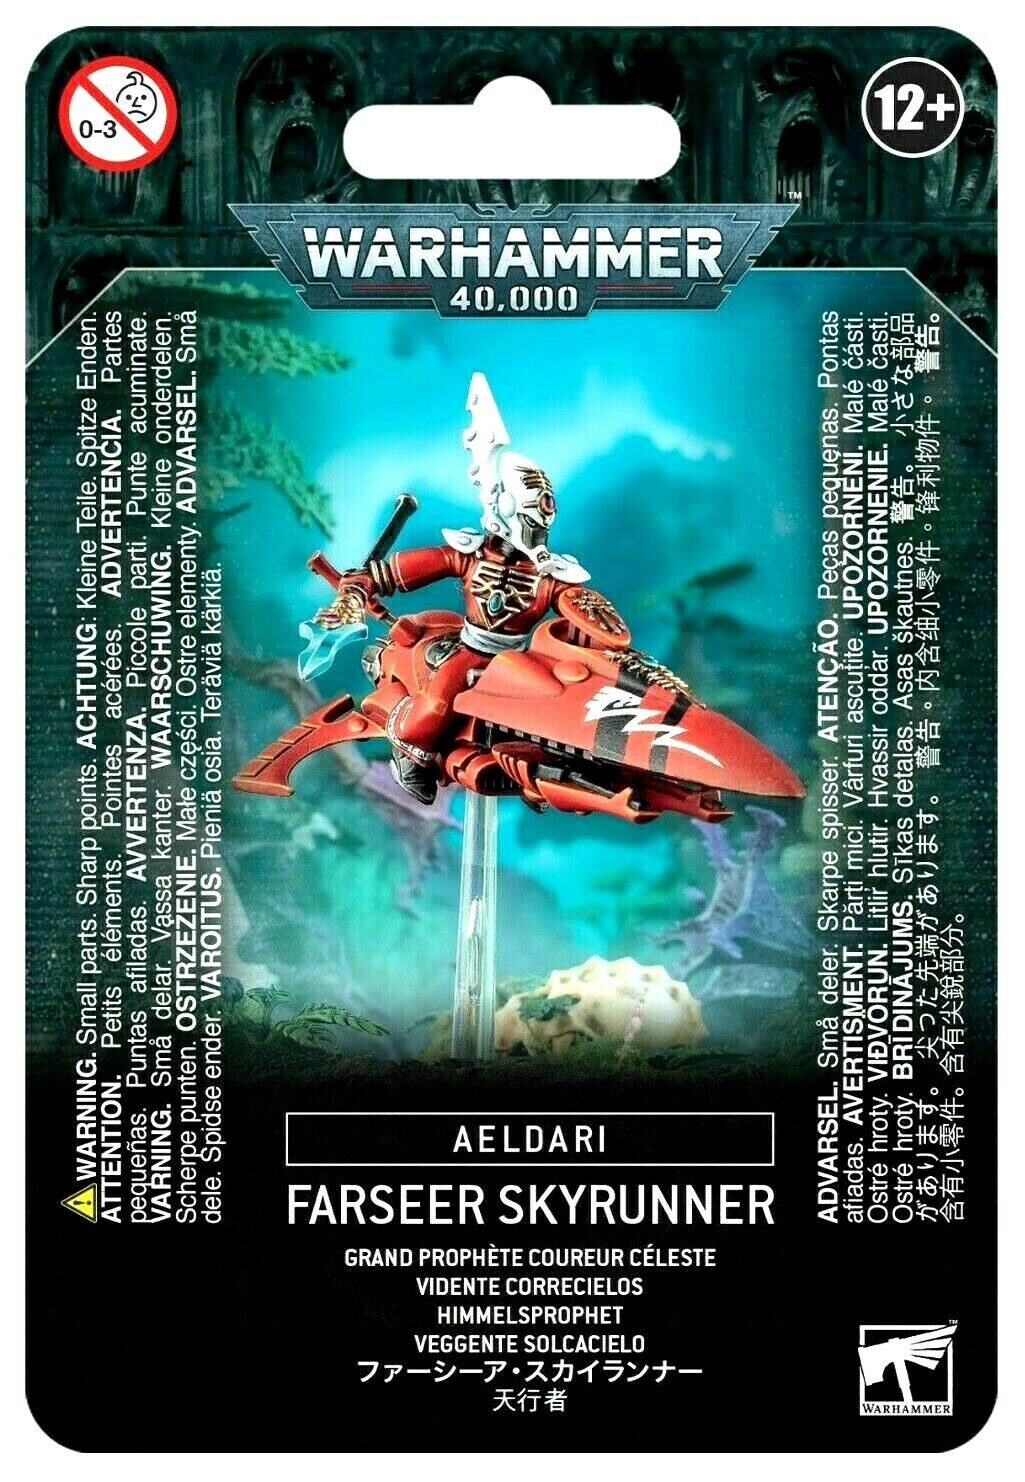 Farseer Skyrunner Aeldari Eldar Craftworlds Warhammer 40K NIB!           WBGames